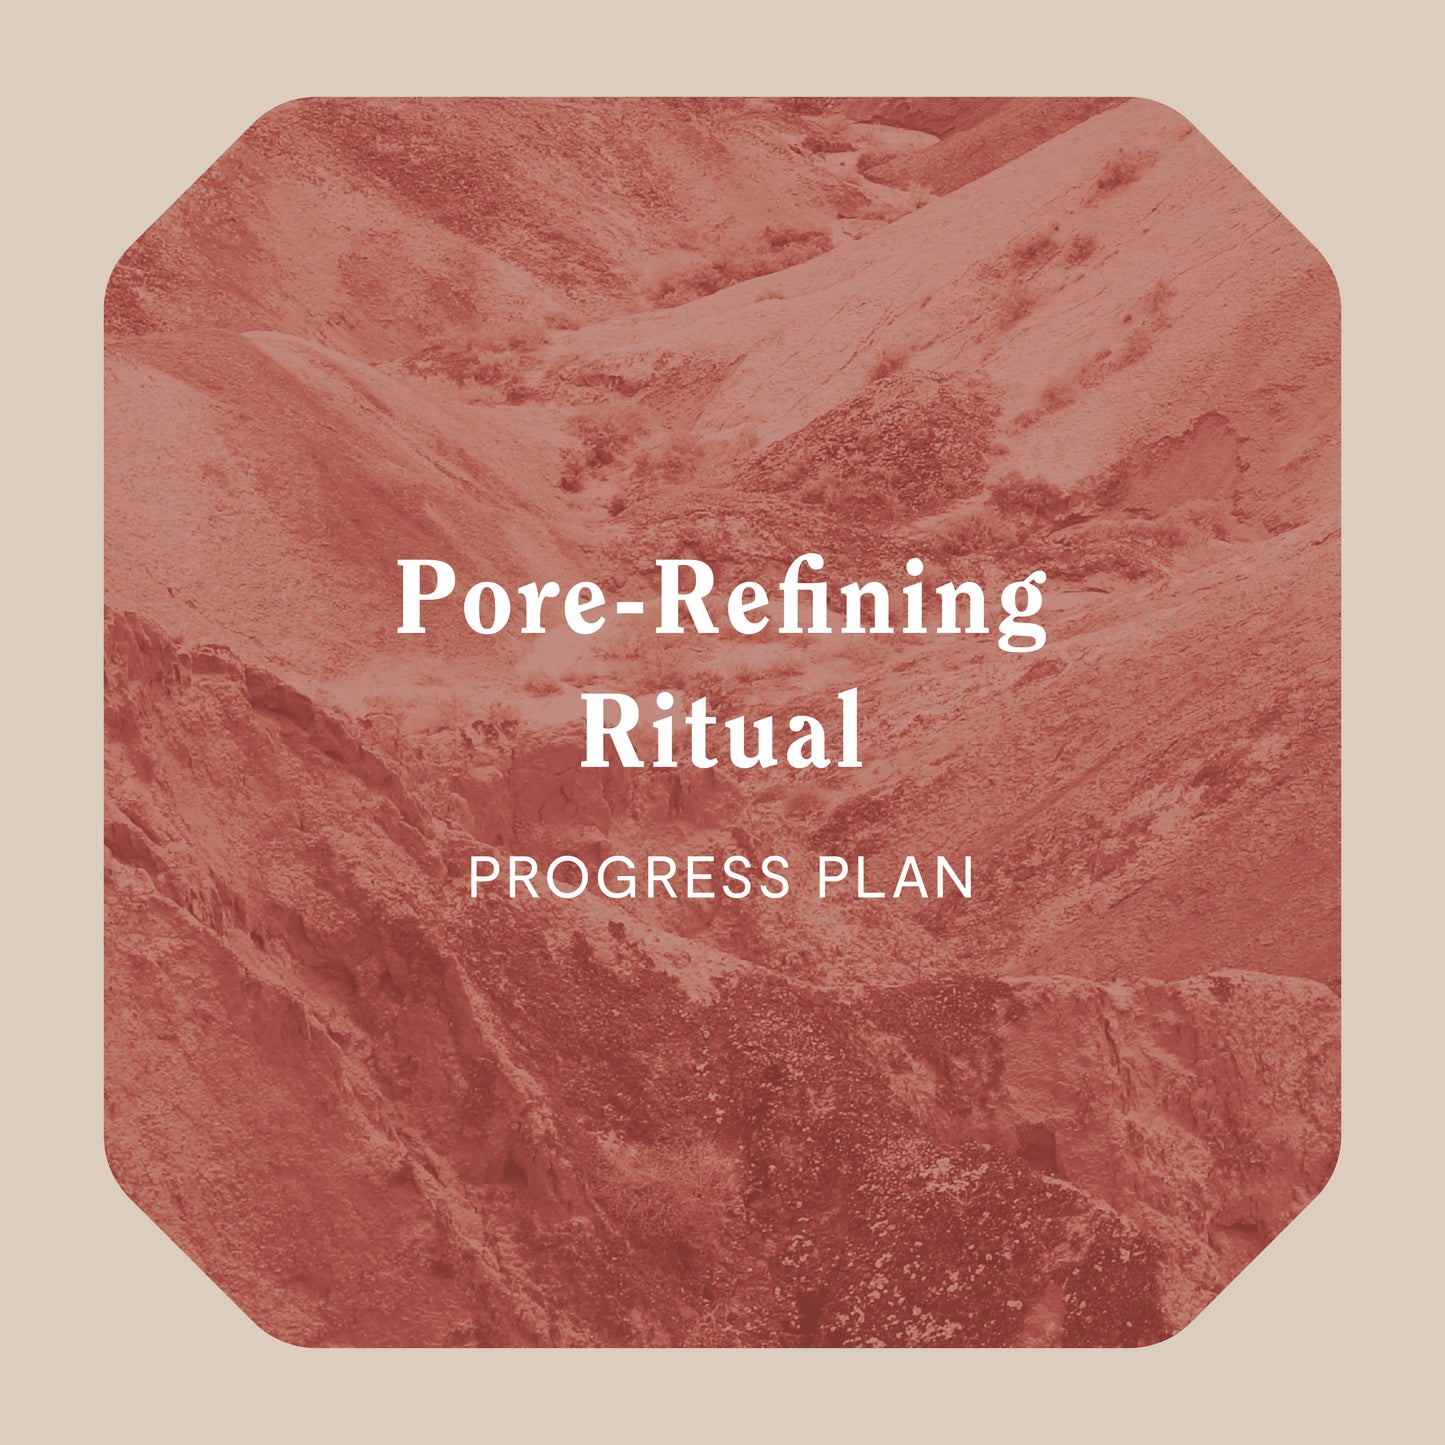 Pore-Refining Ritual - Progress Plan